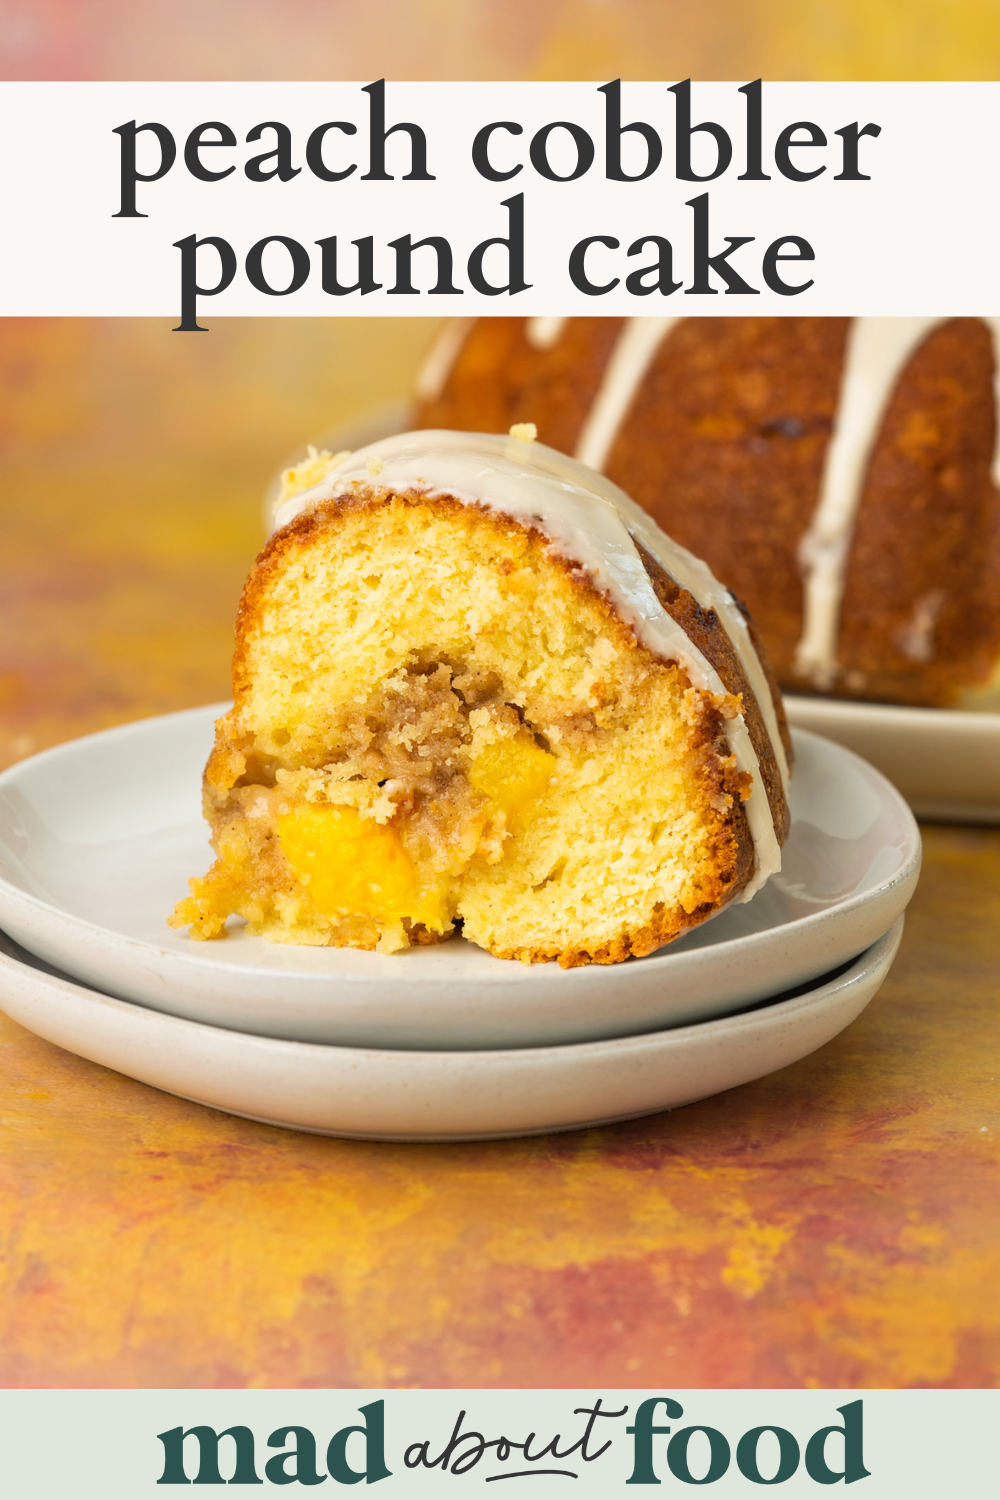 Image for pinning peach cobbler pound cake on Pinterest